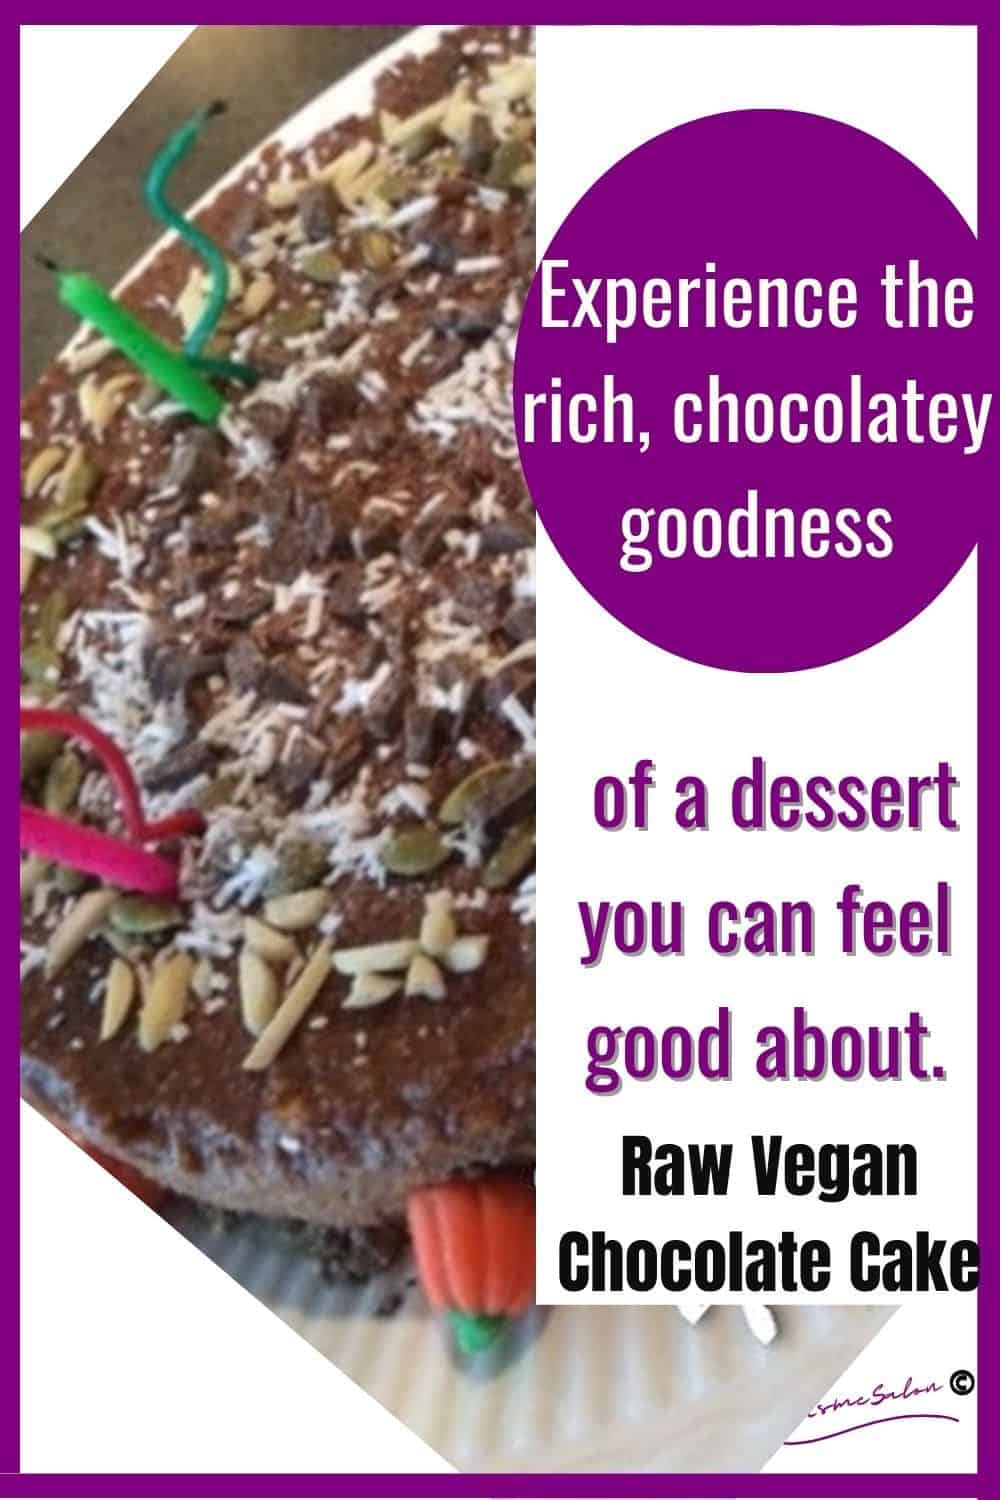 an image of Raw Vegan Chocolate Cake